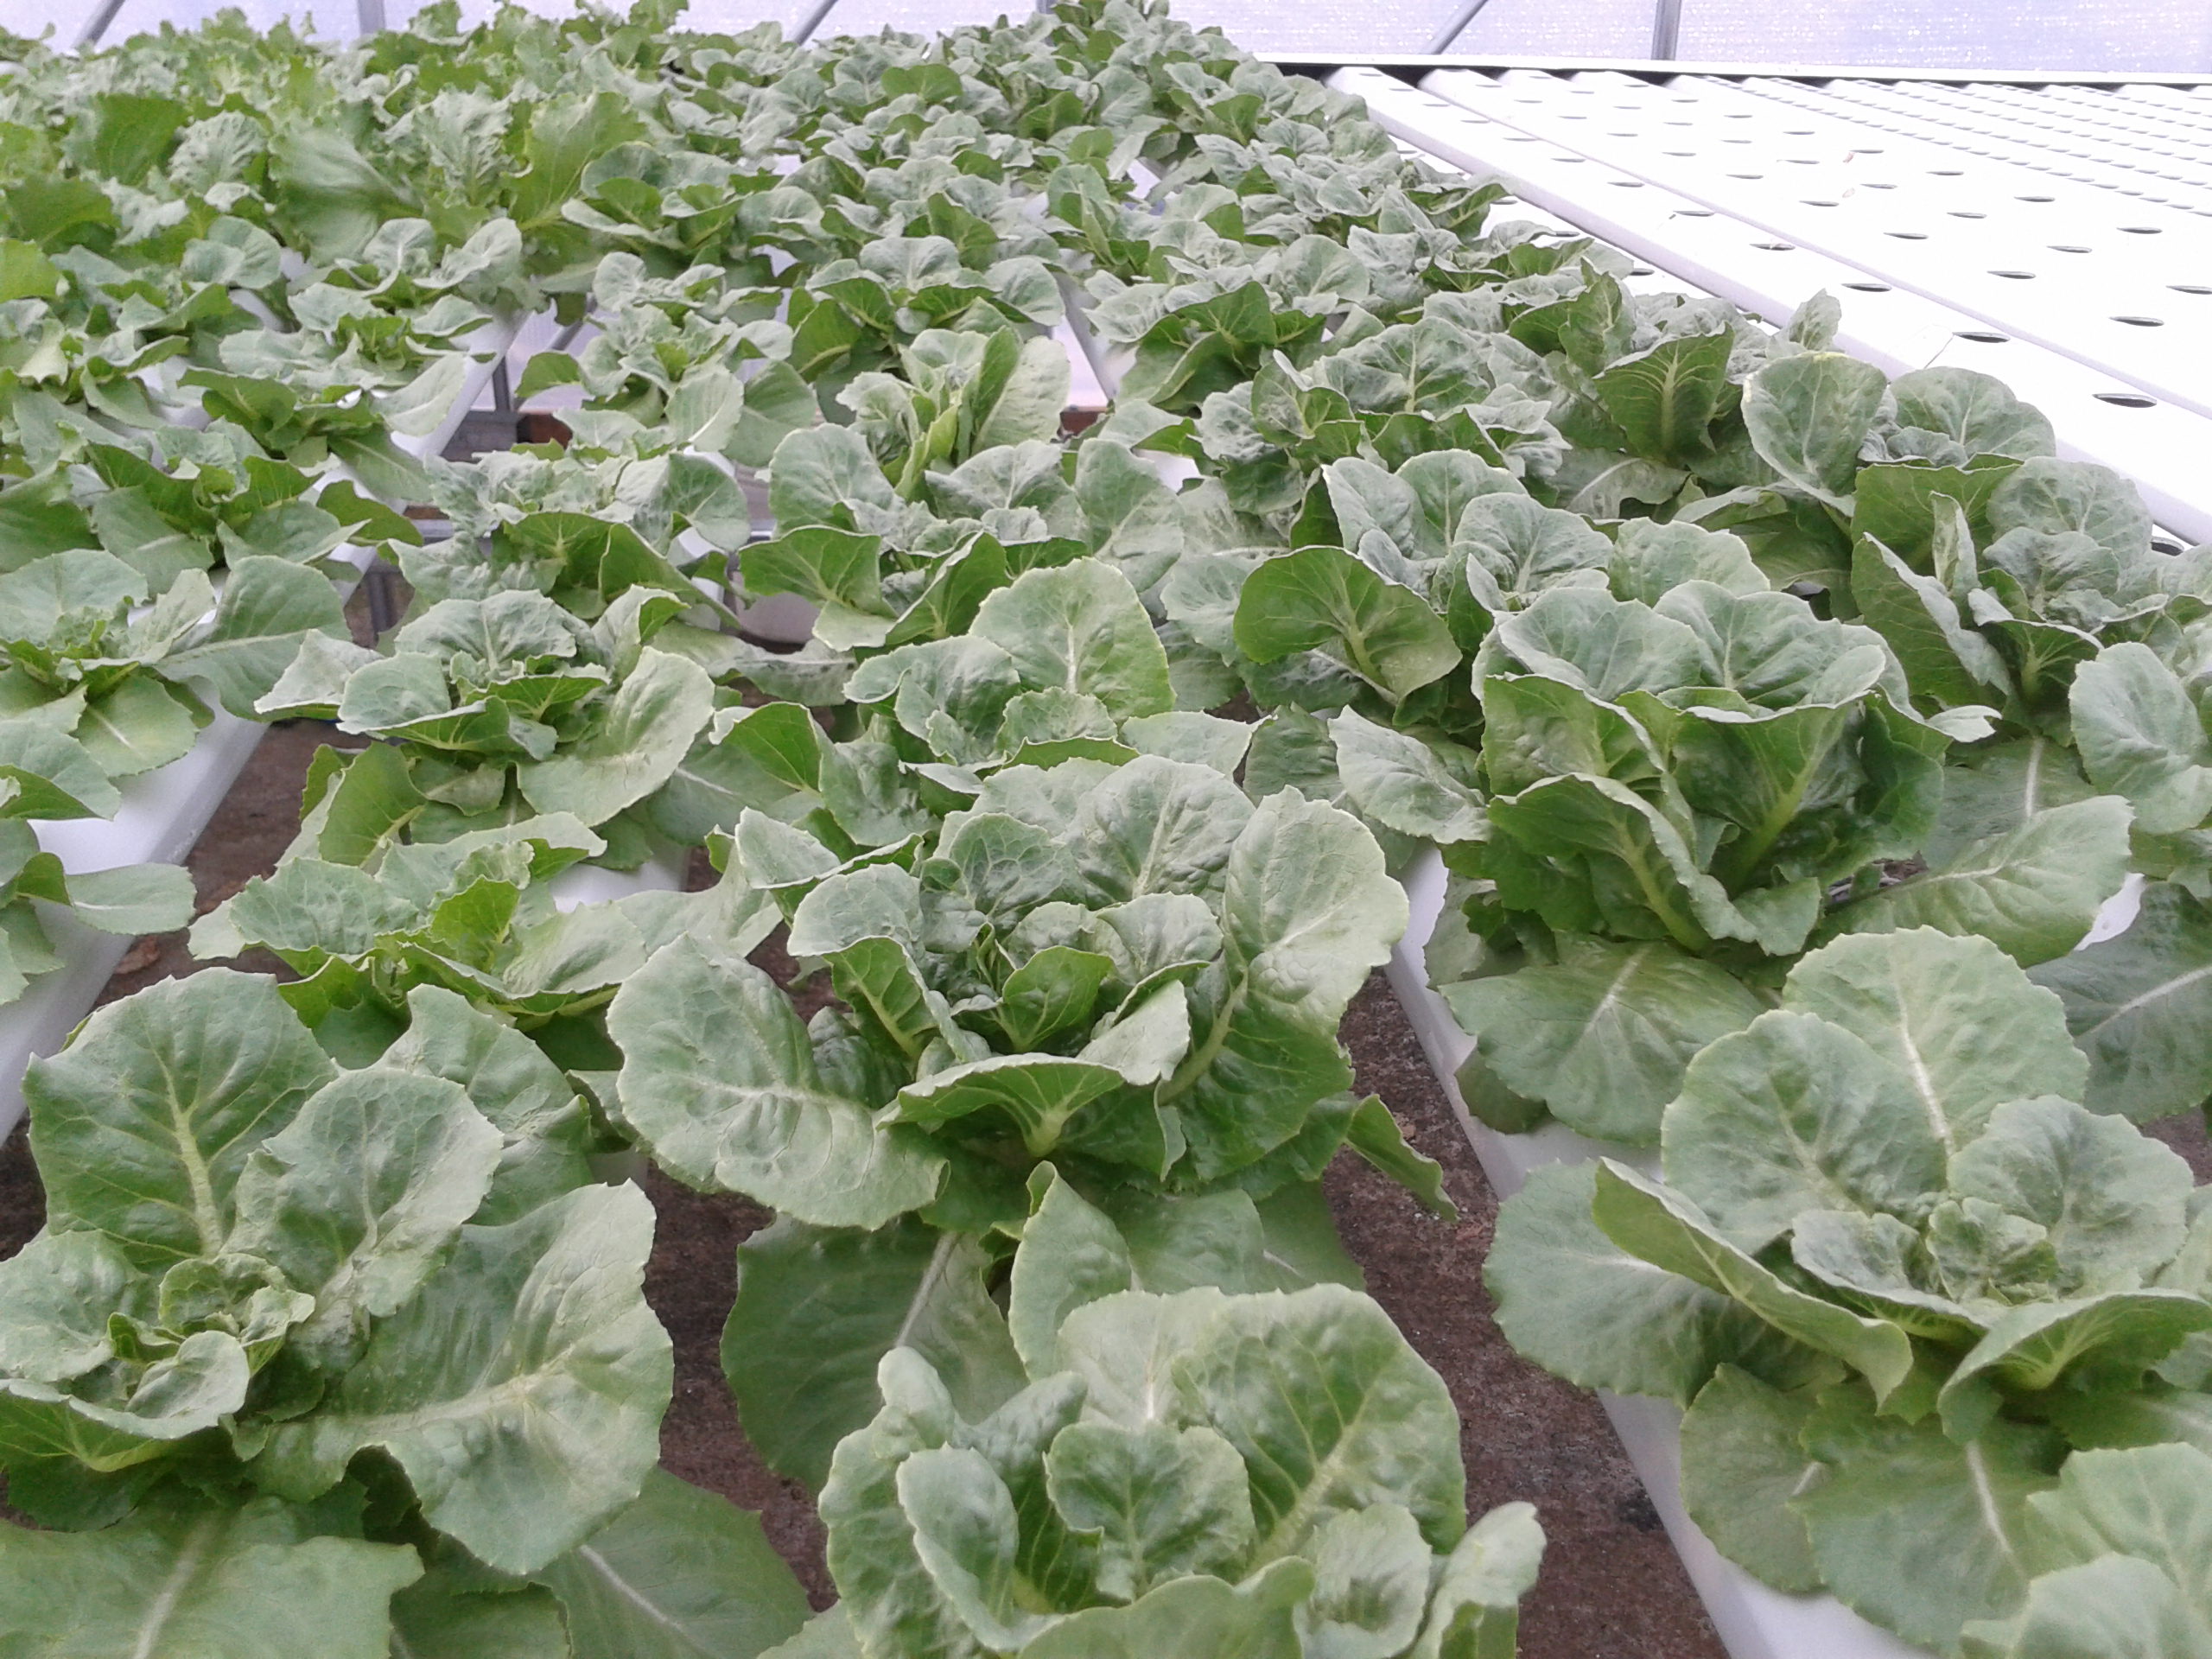 hydroponic lettuce mild